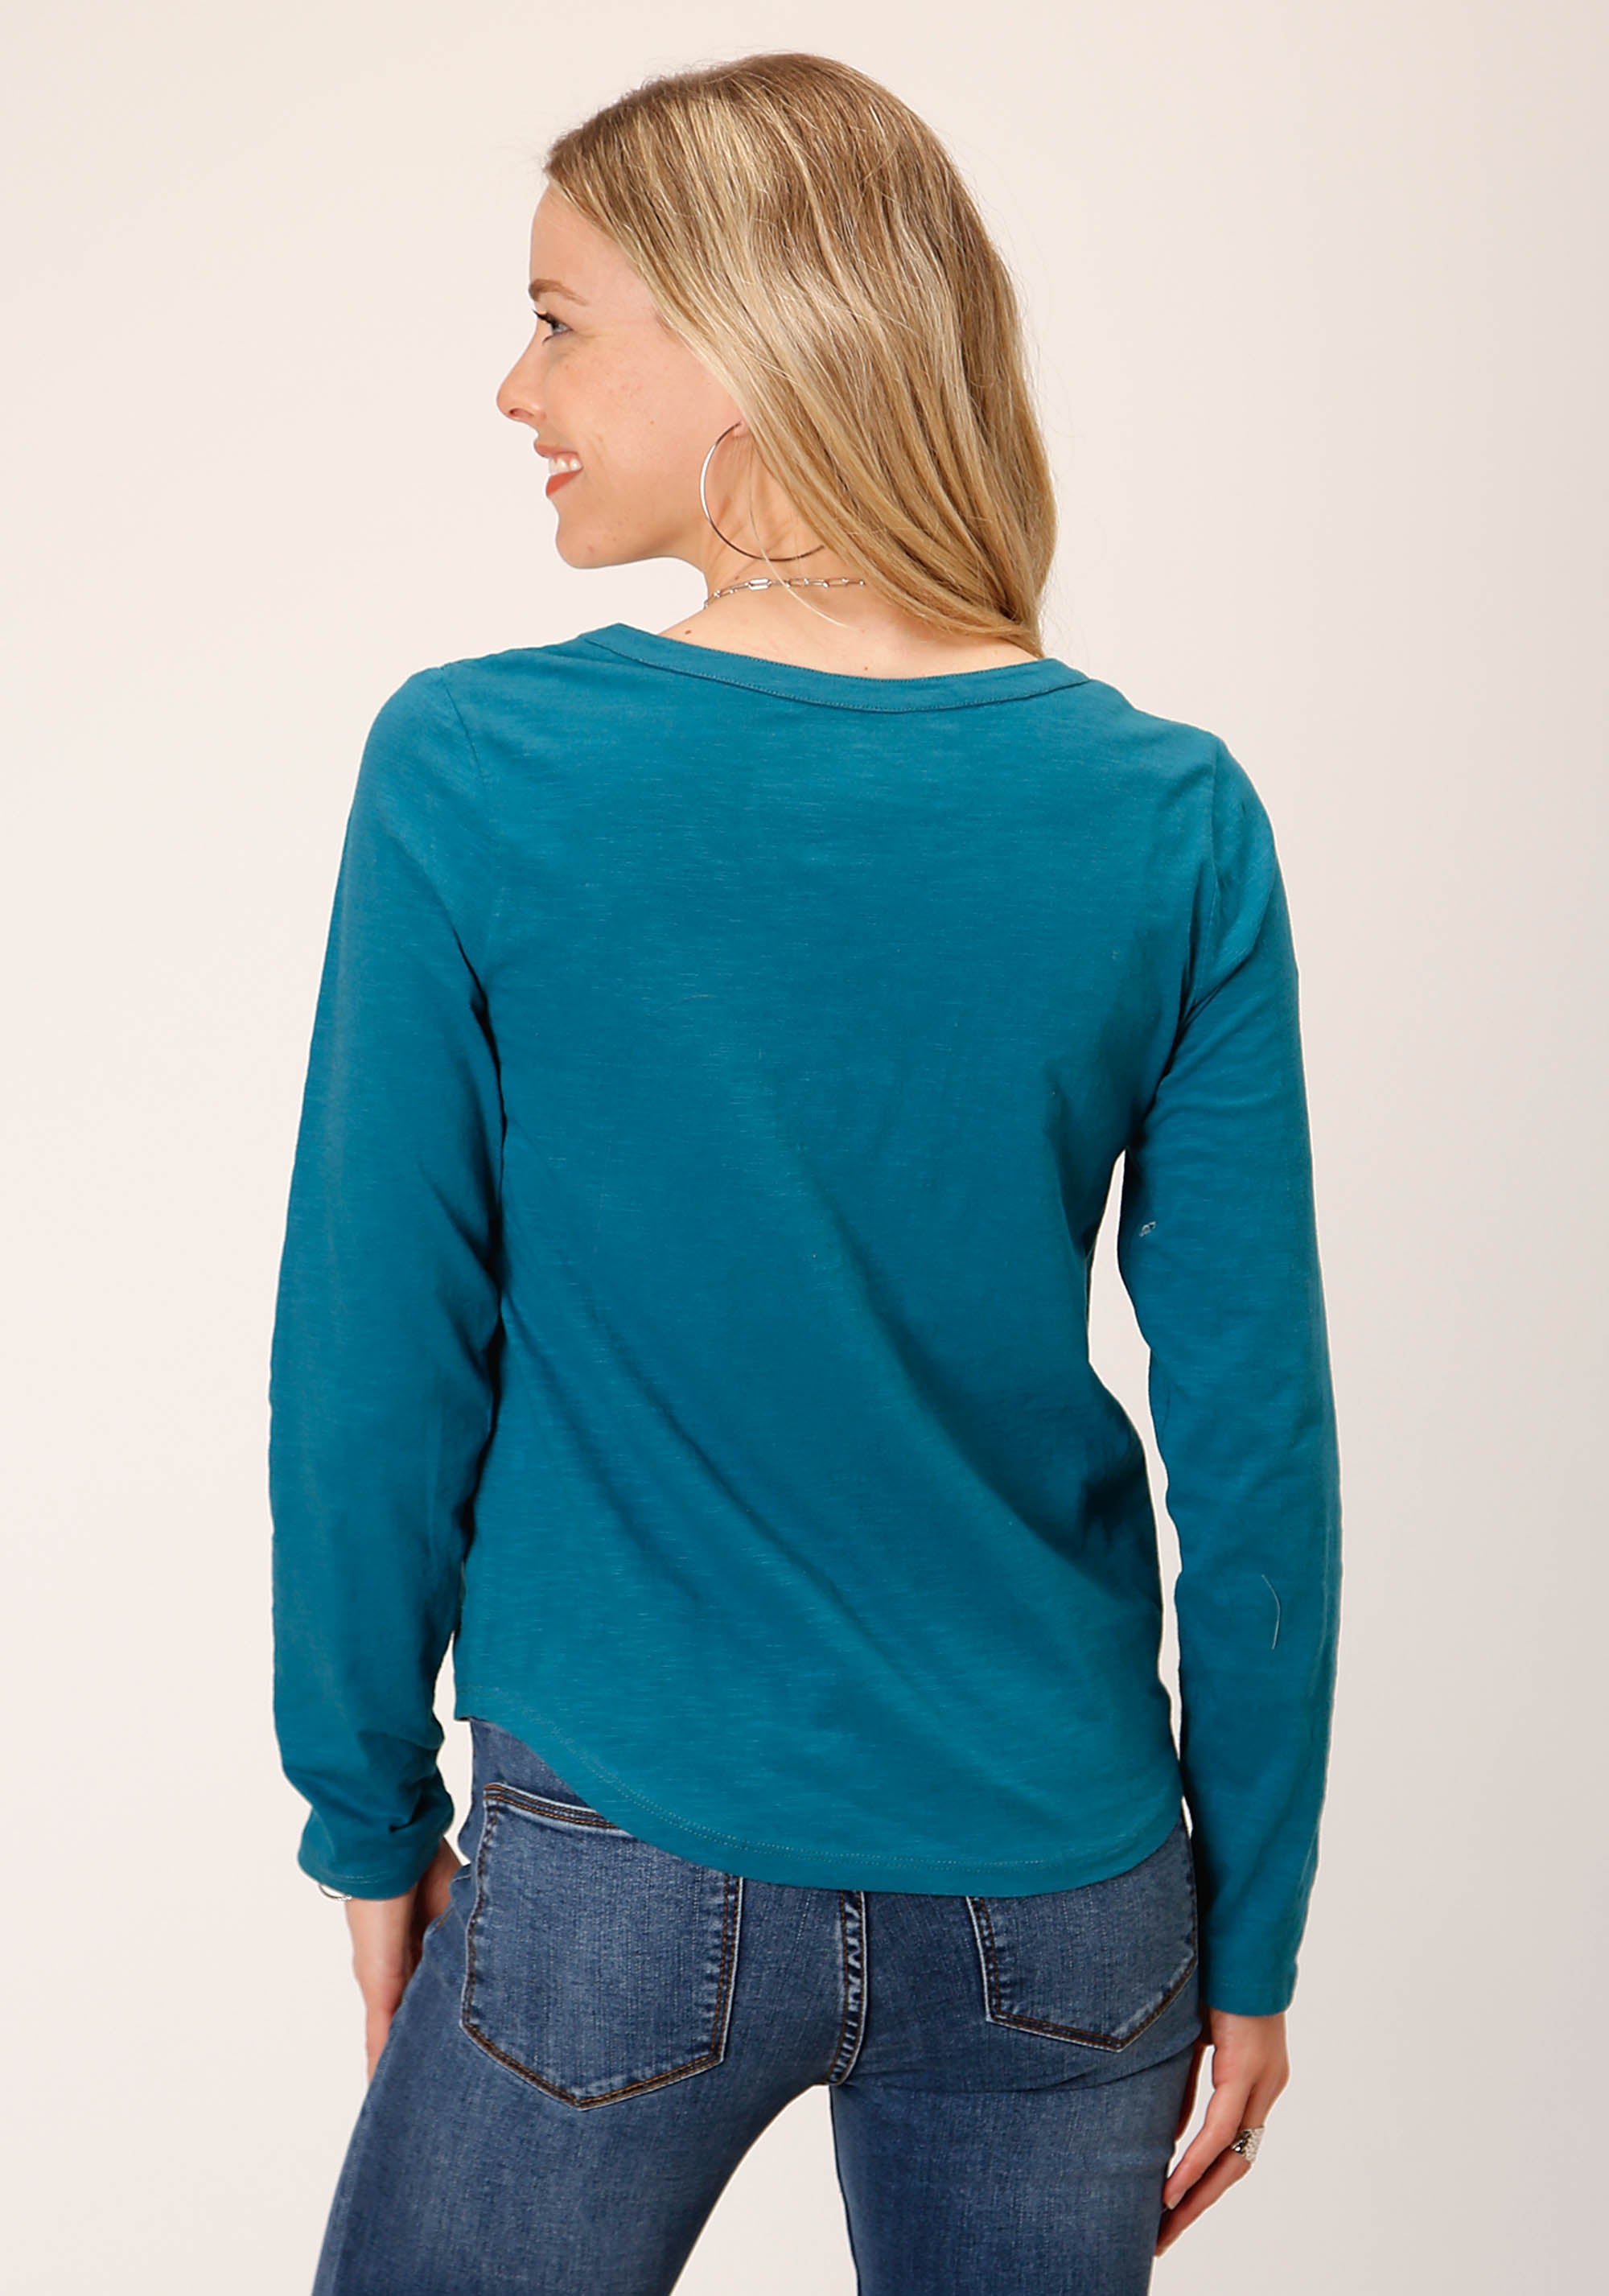 Roper Womens Long Sleeve Knit Cotton Slub Jersey Tee Shirt Top